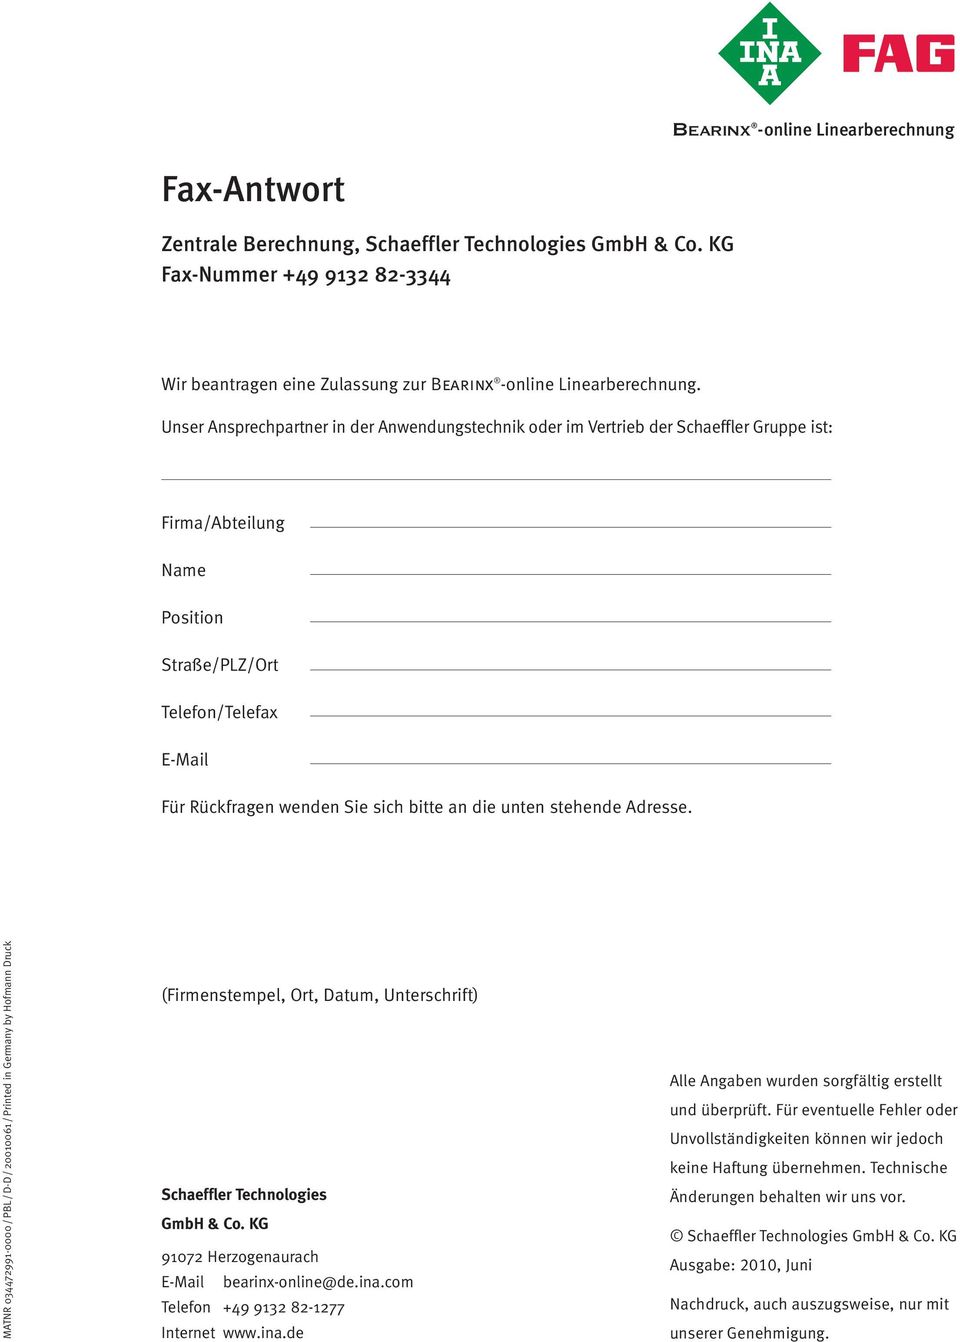 die unten stehende Adresse. MATNR 034472991-0000 / PBL / D-D / 20010061 / Printed in Germany by Hofmann Druck (Firmenstempel, Ort, Datum, Unterschrift) Schaeffler Technologies GmbH & Co.